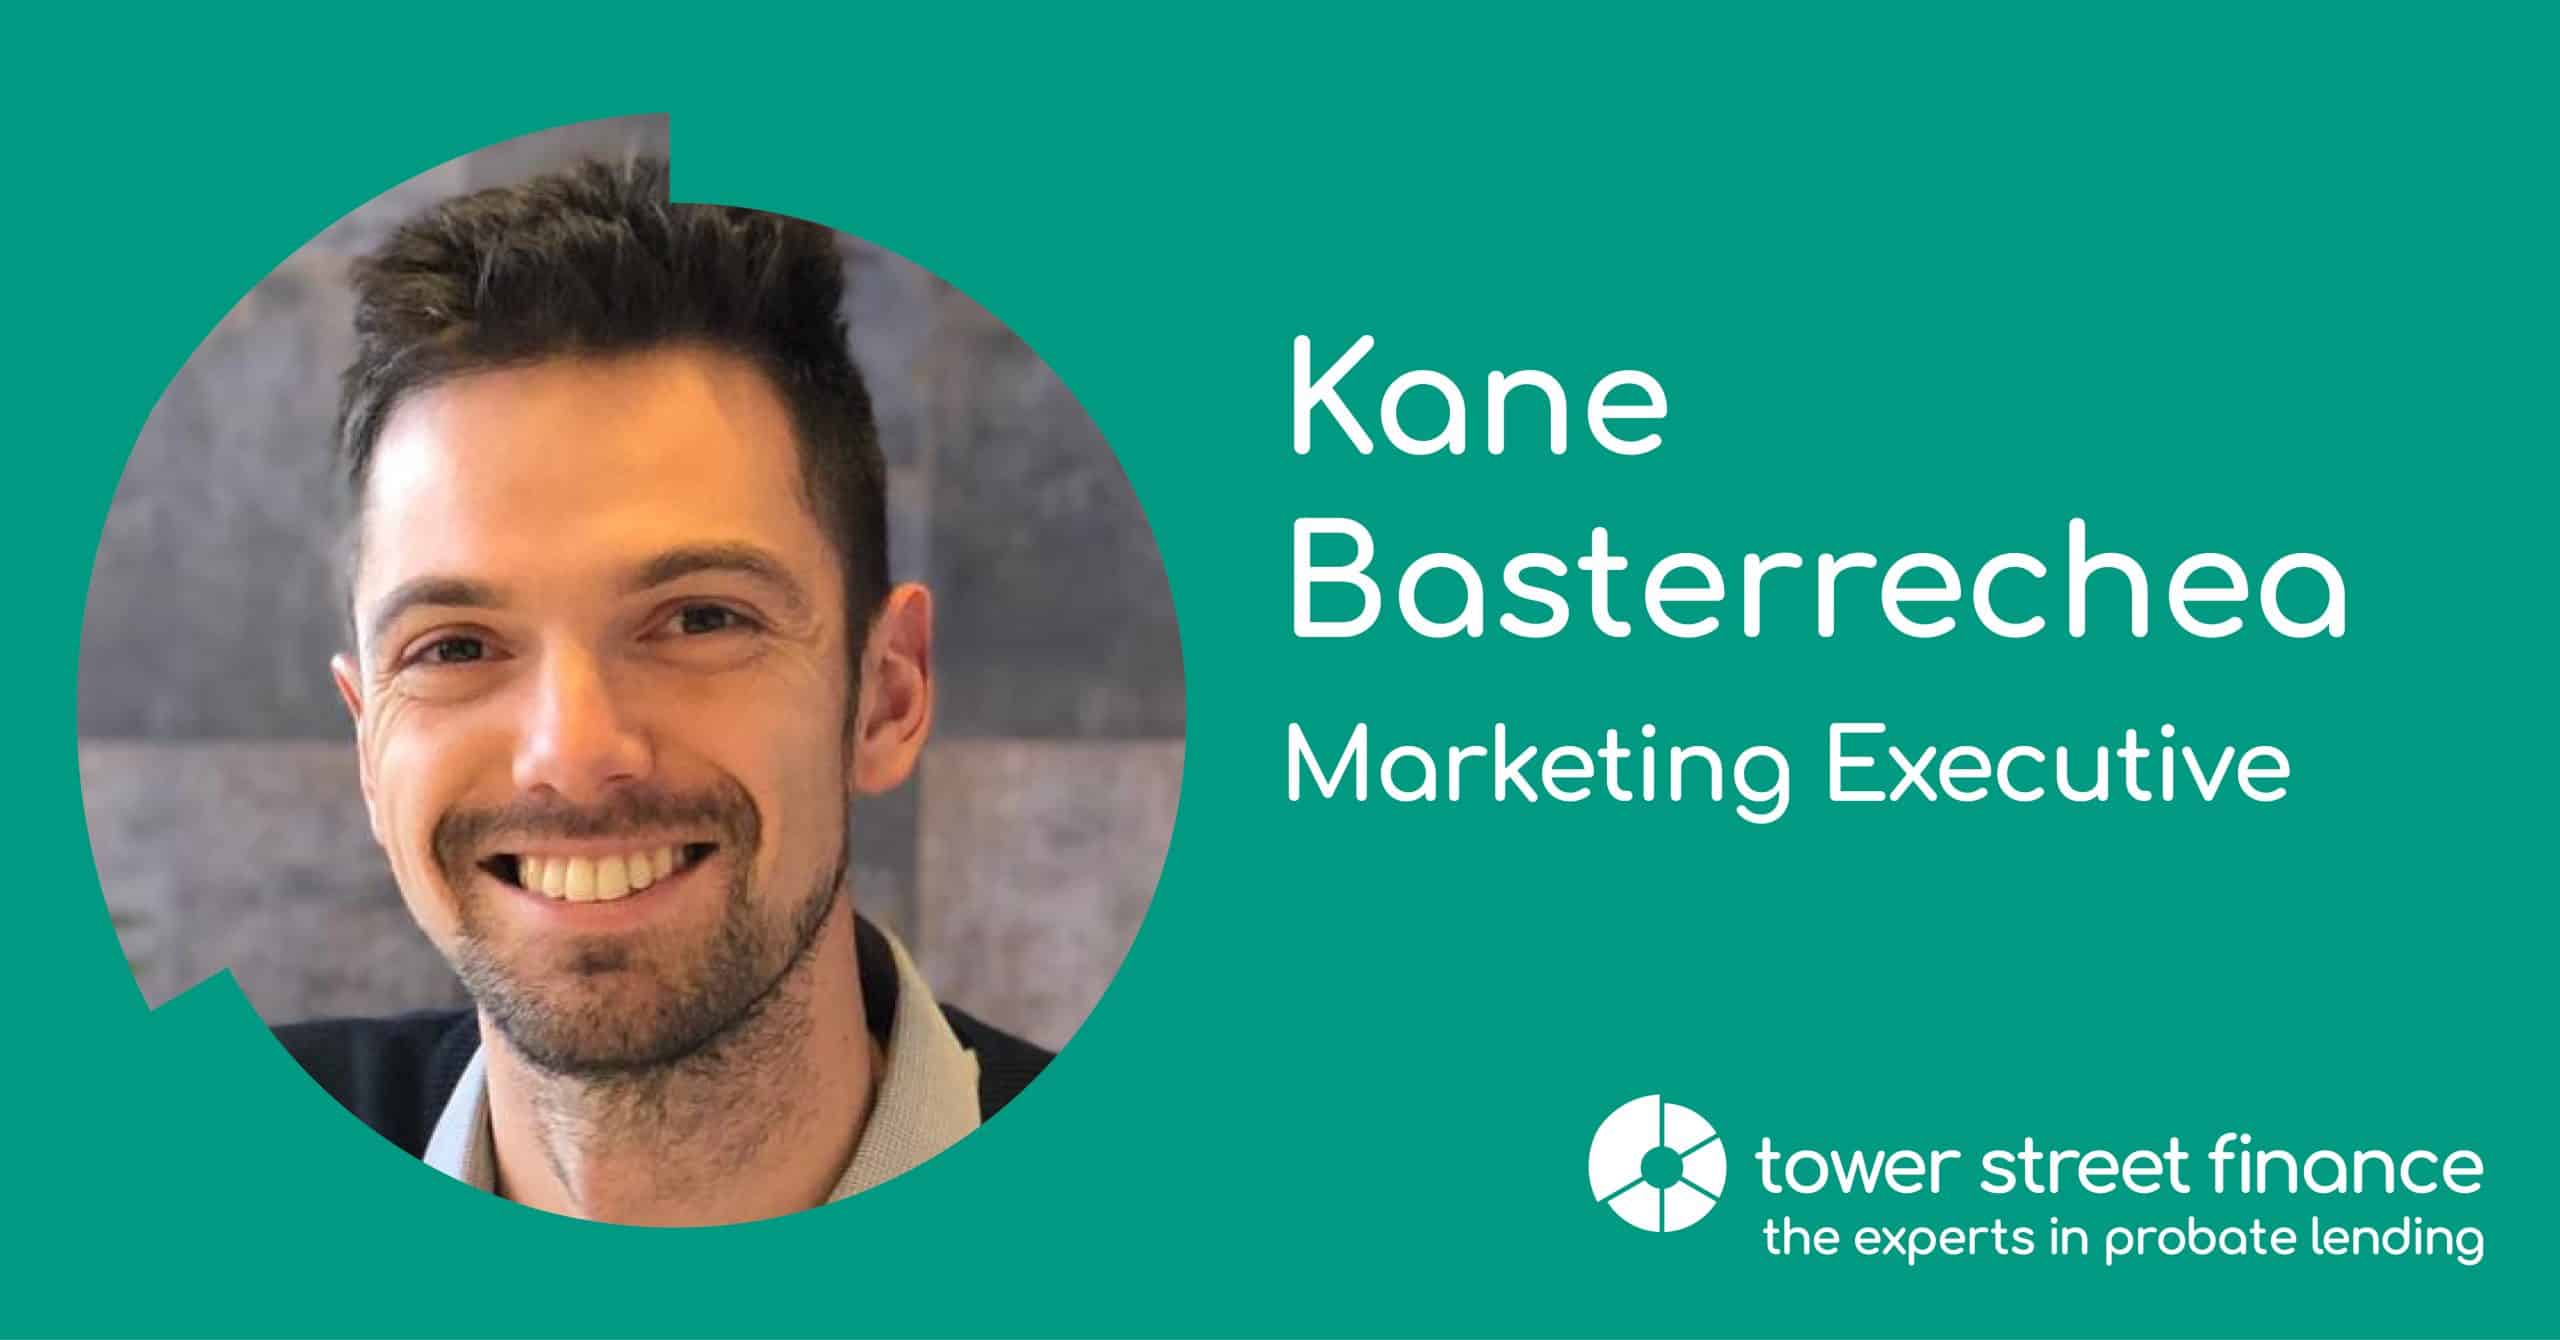 Kane joins Tower Street Finance